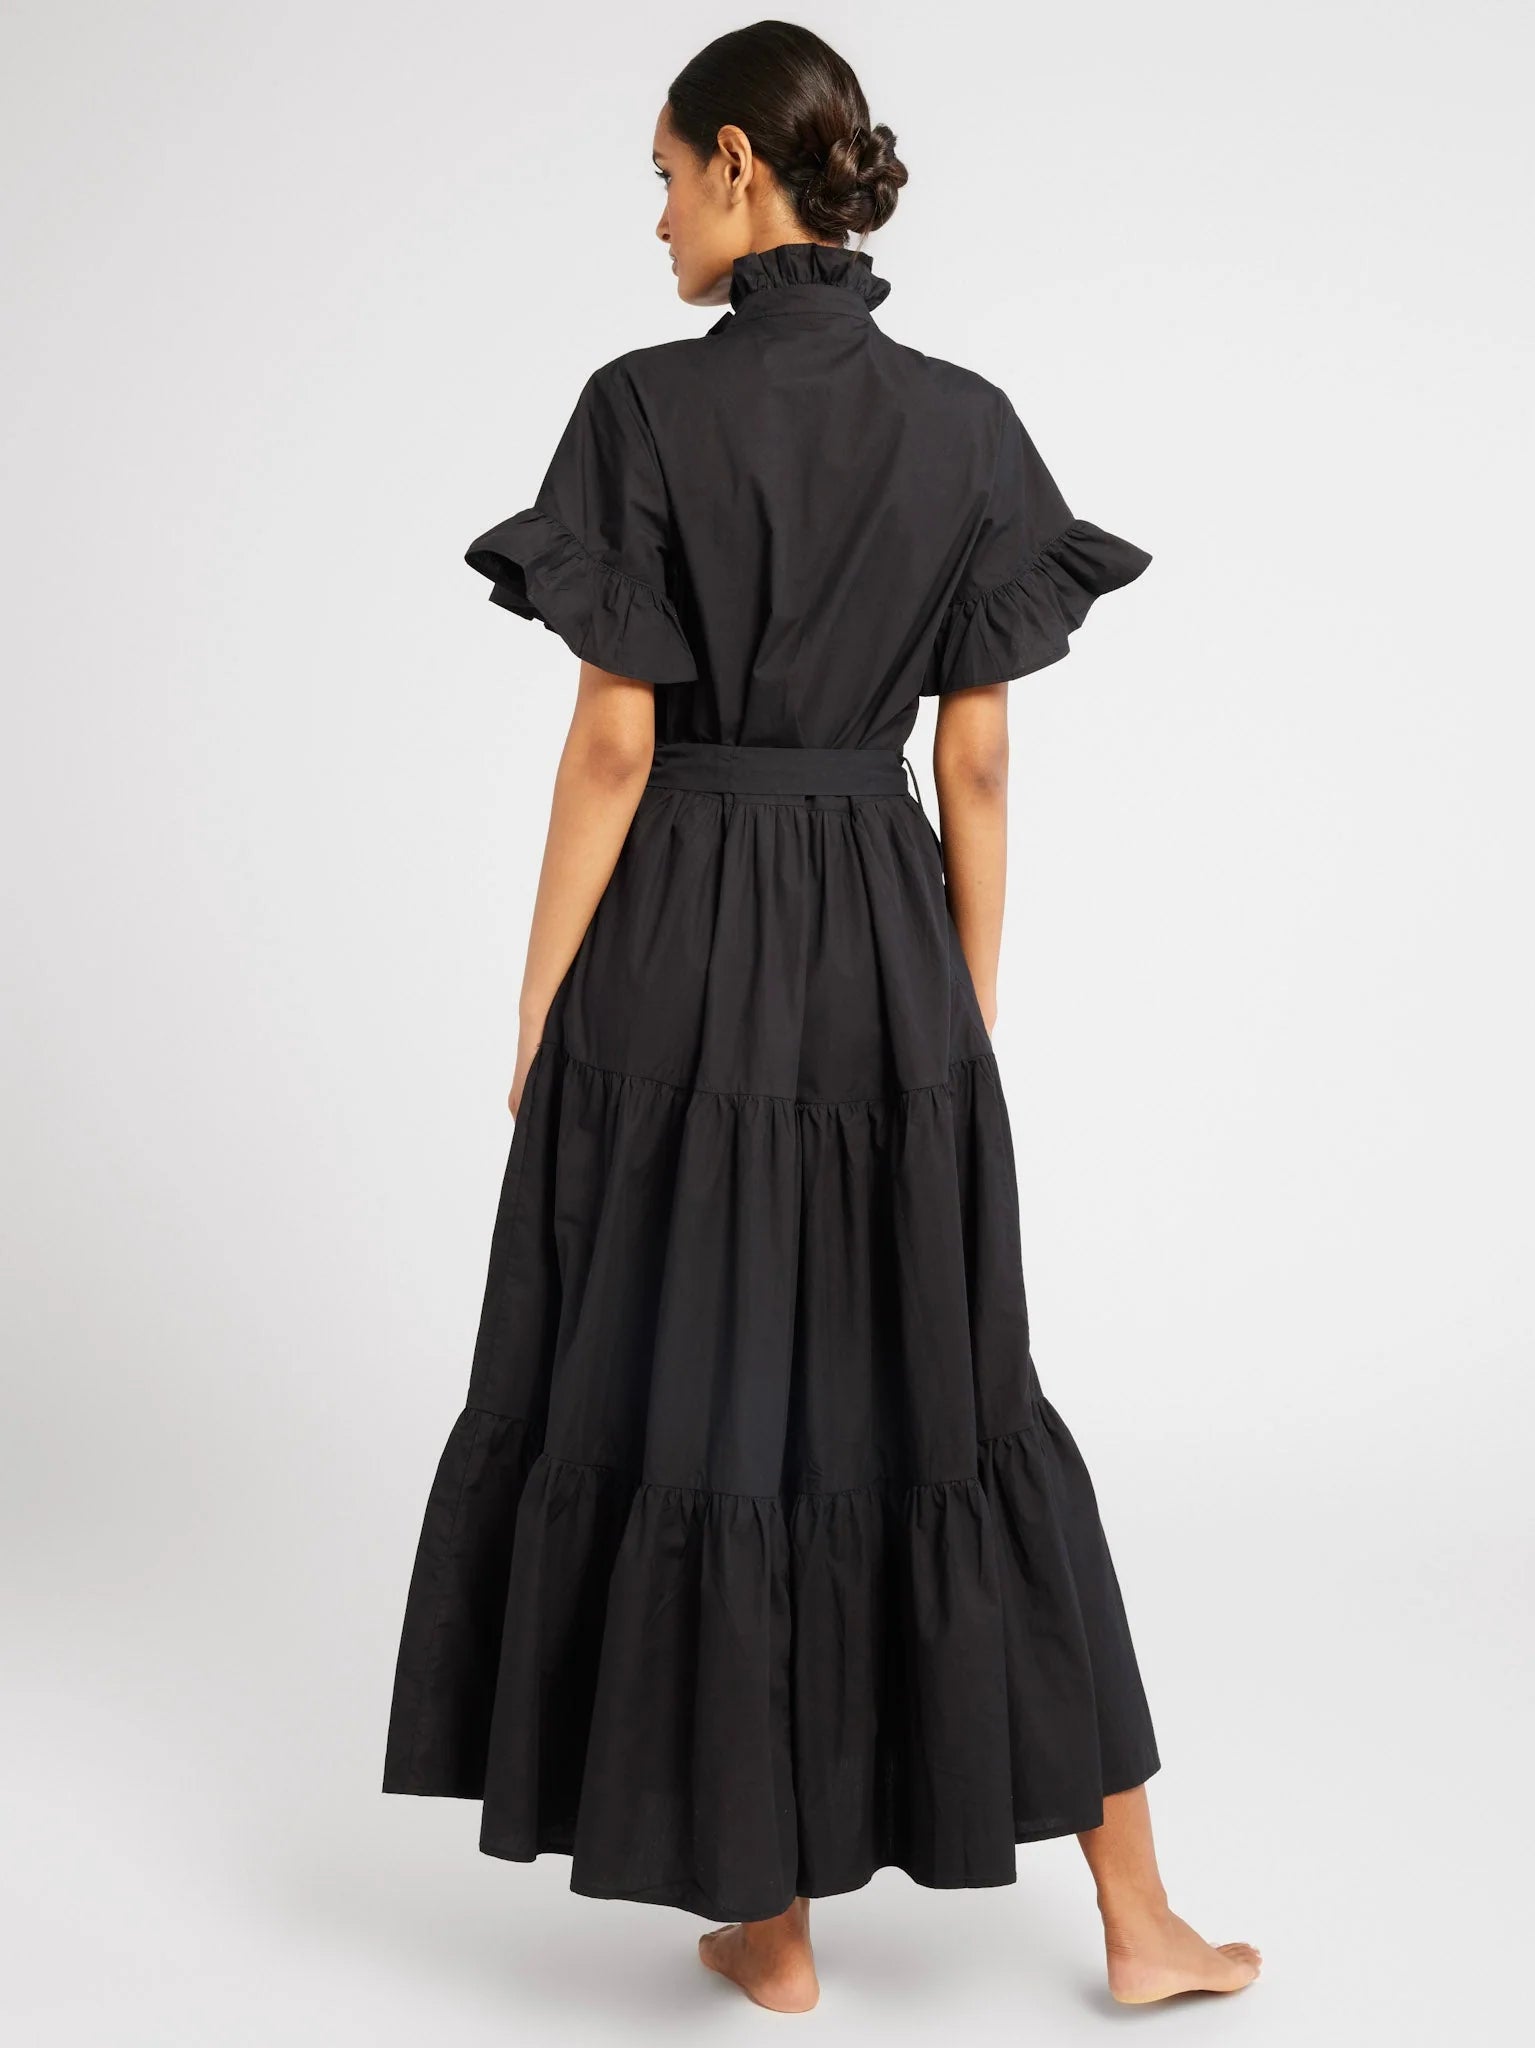 Mille Victoria Dress - Black